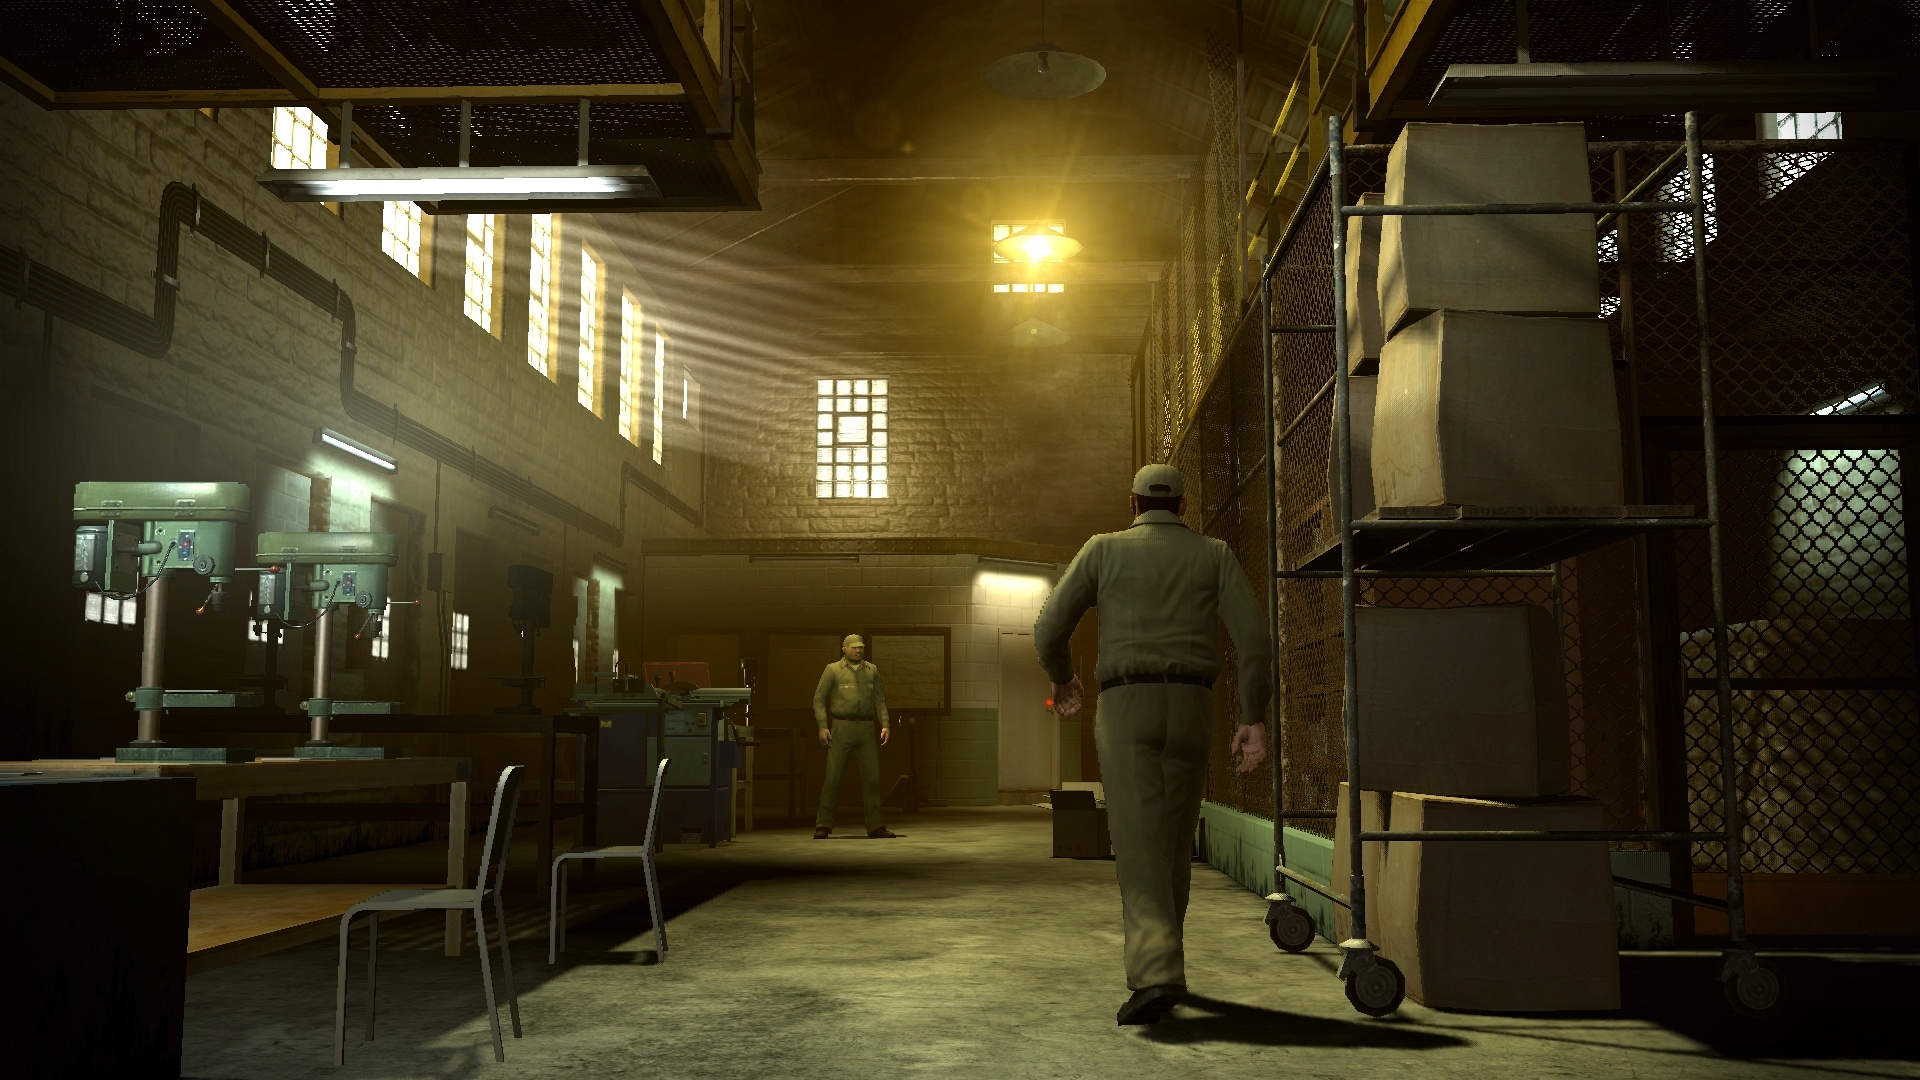 Игра побег 5. Игра Prison Break 2. Побег с тюрьмы игра. ПРИЗОН брейк игра. Игра побег на Xbox 360.